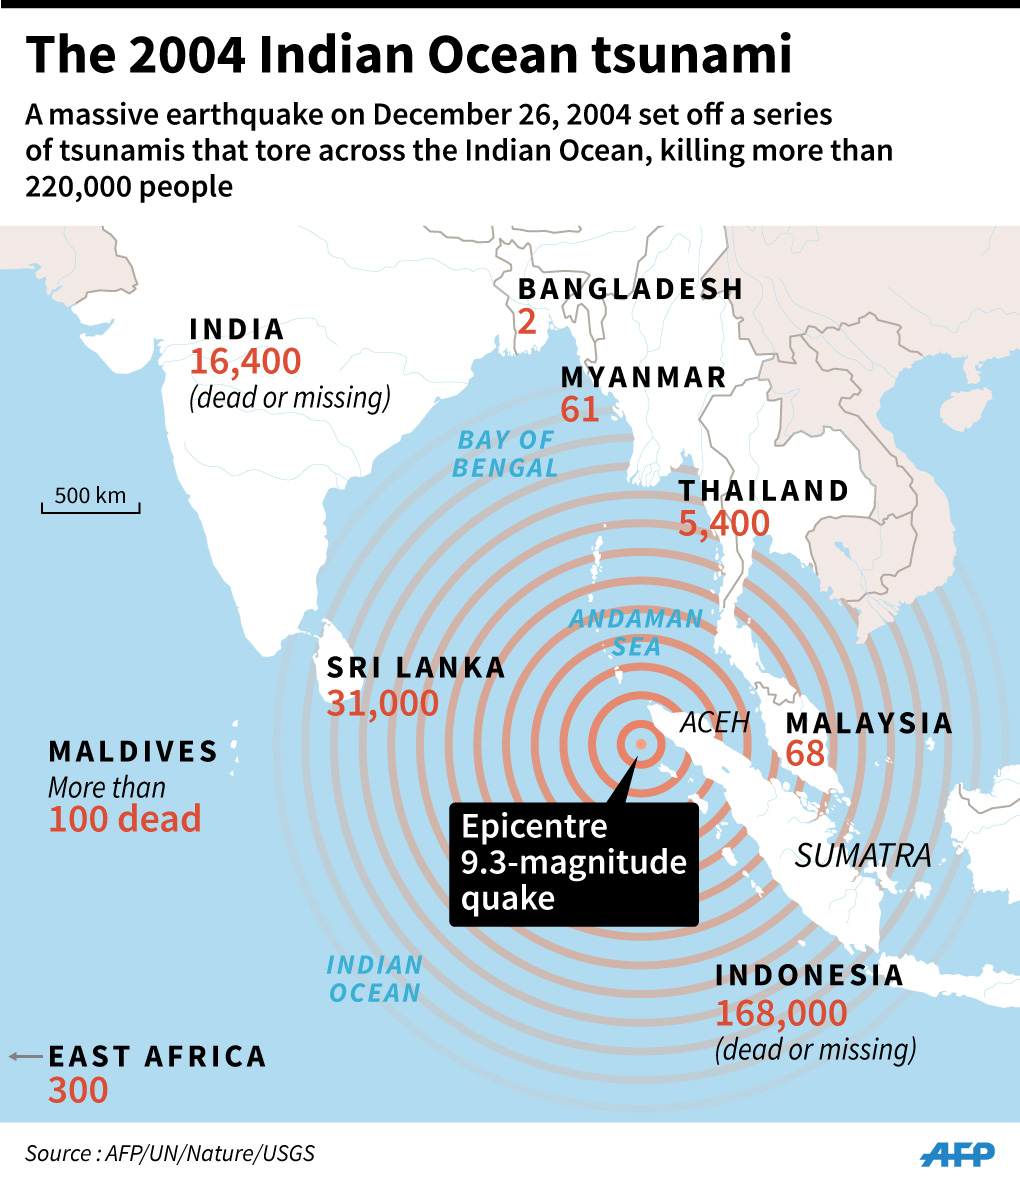 TIMELINE: The devastating 2004 Indian Ocean tsunami | GMA News Online